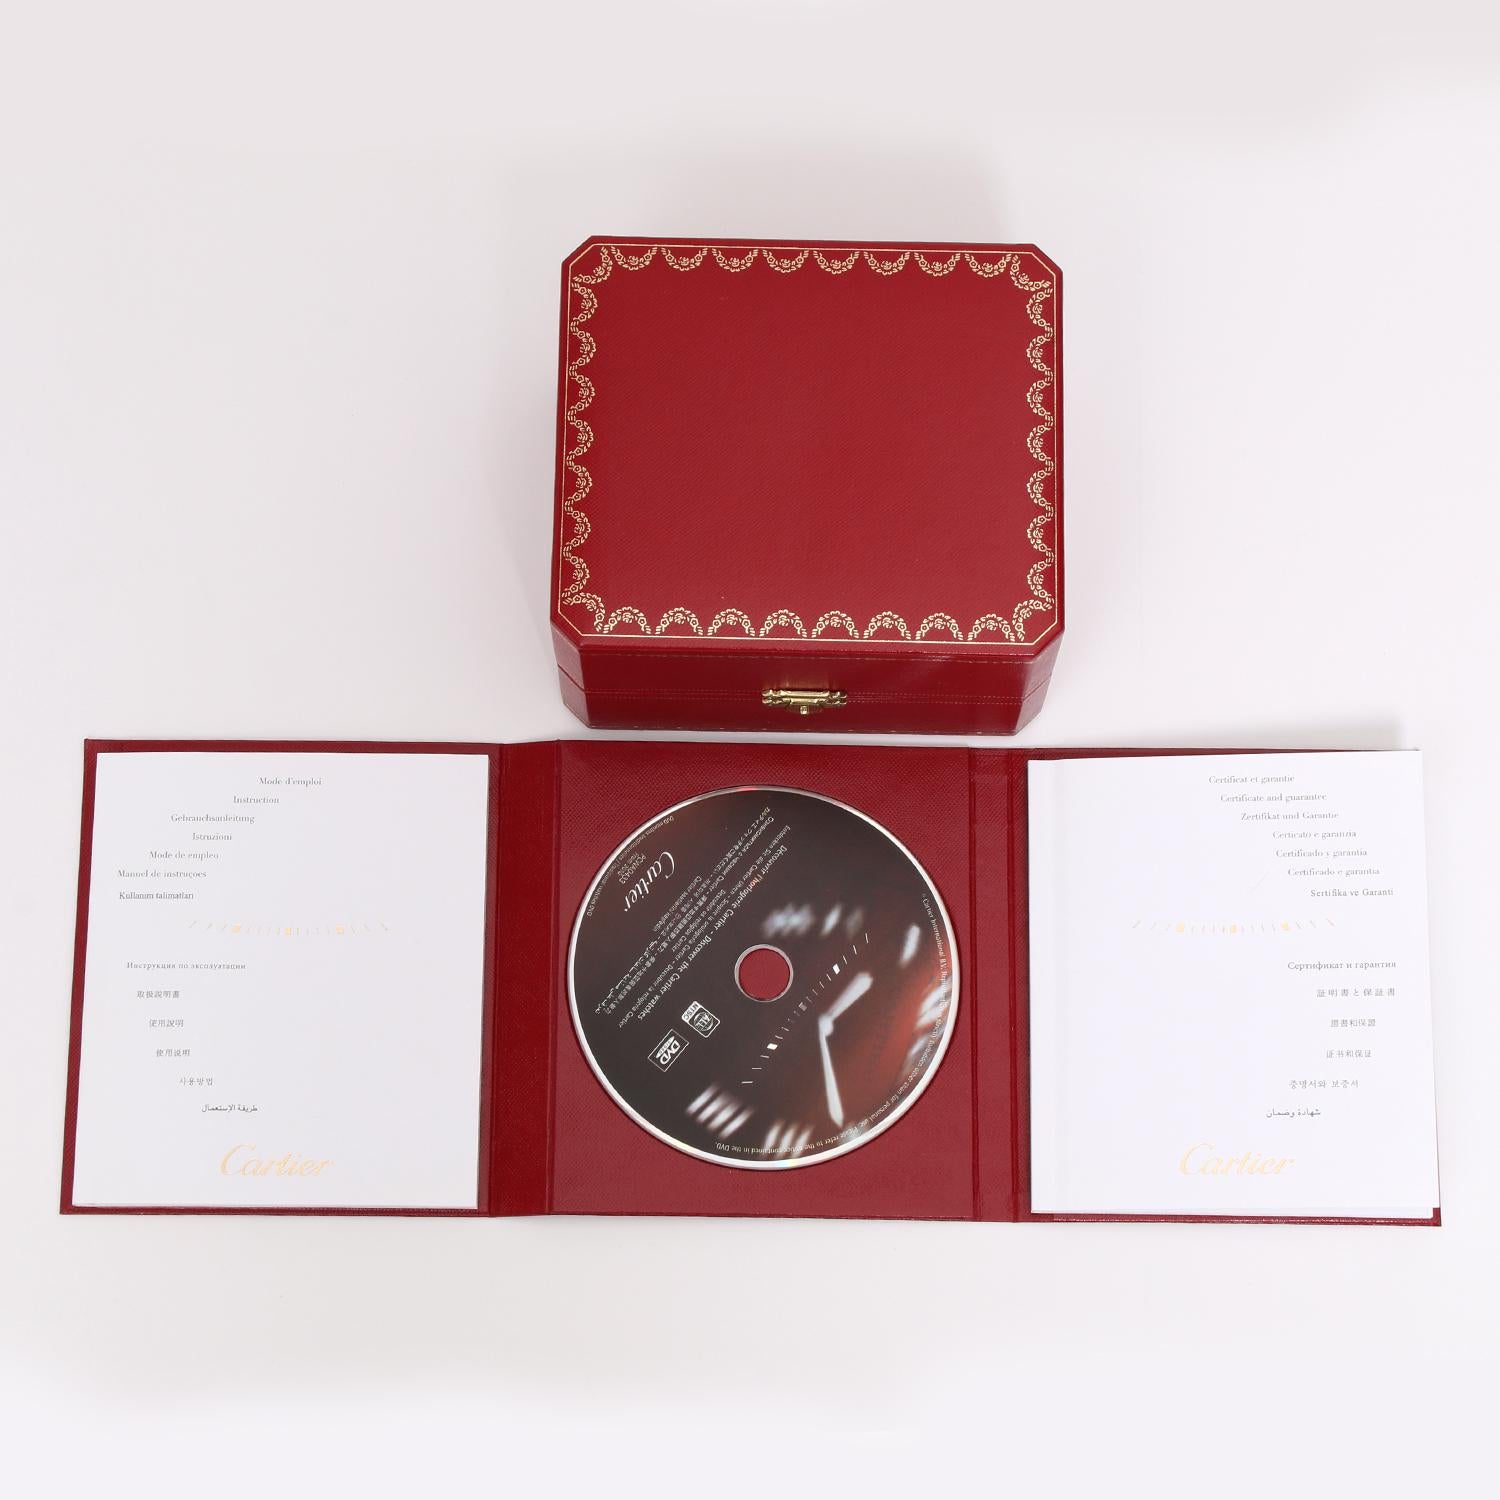 Cartier Stainless Steel Automatic Wristwatch Ref W7100015 2